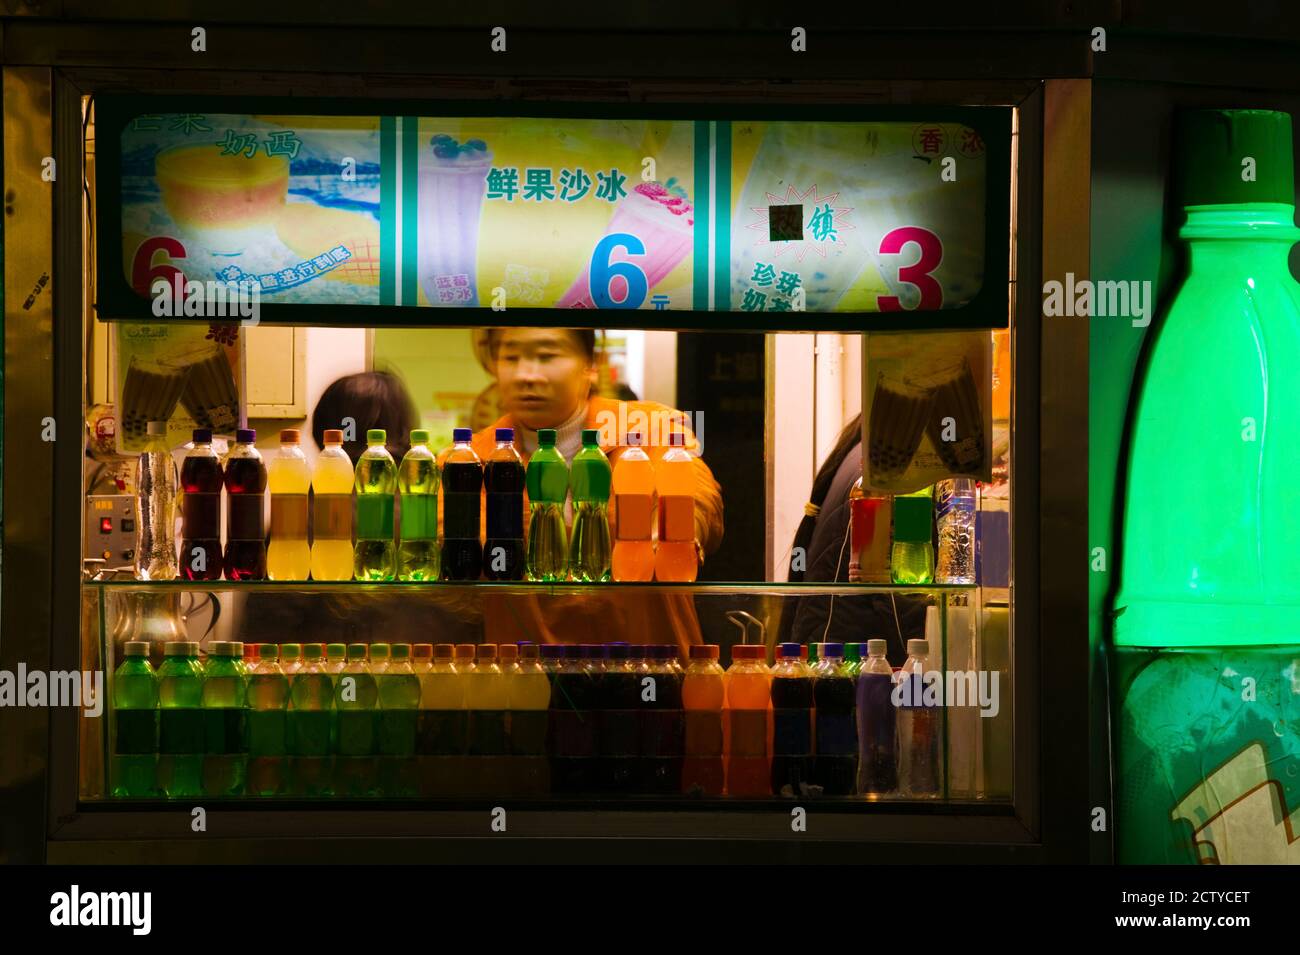 Snack shop on East Nanjing Road, Shanghai, China Stock Photo